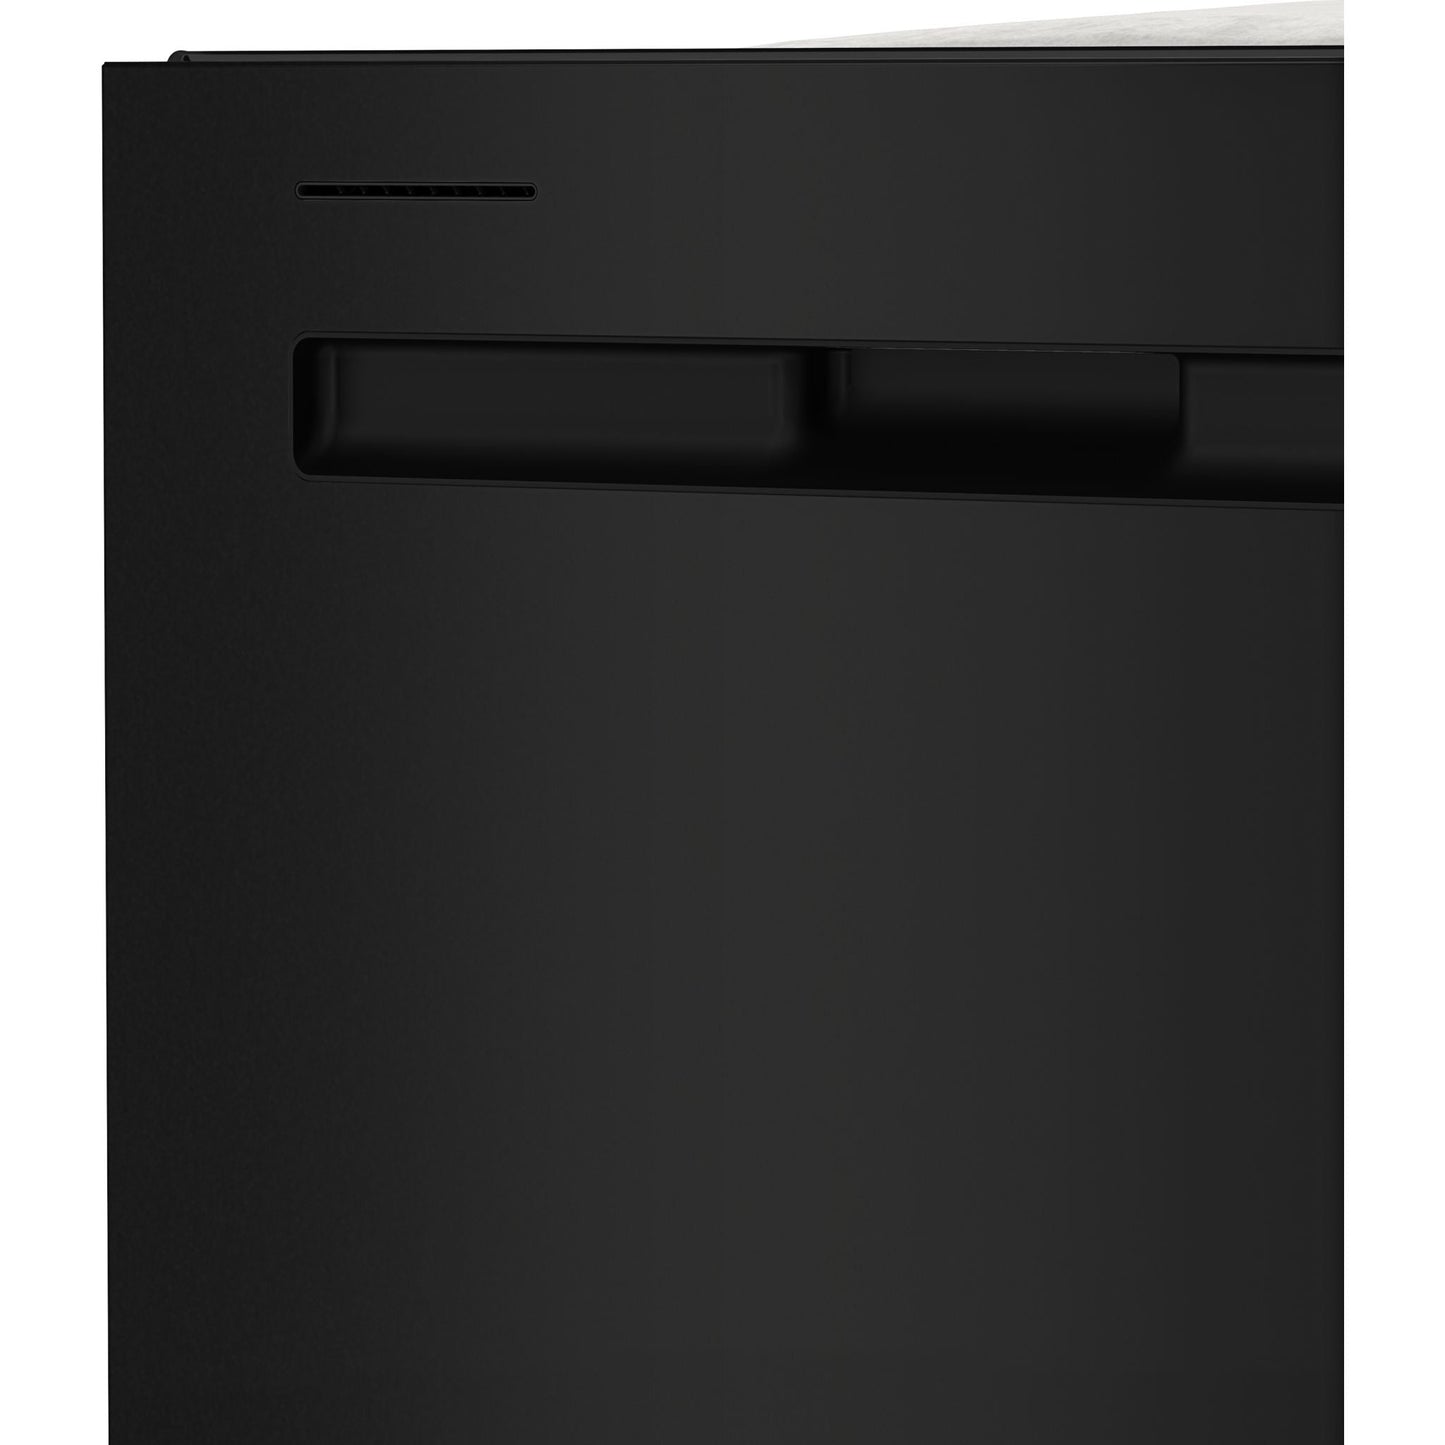 Maytag Dishwasher Stainless Steel Tub (MDB8959SKB) - Black